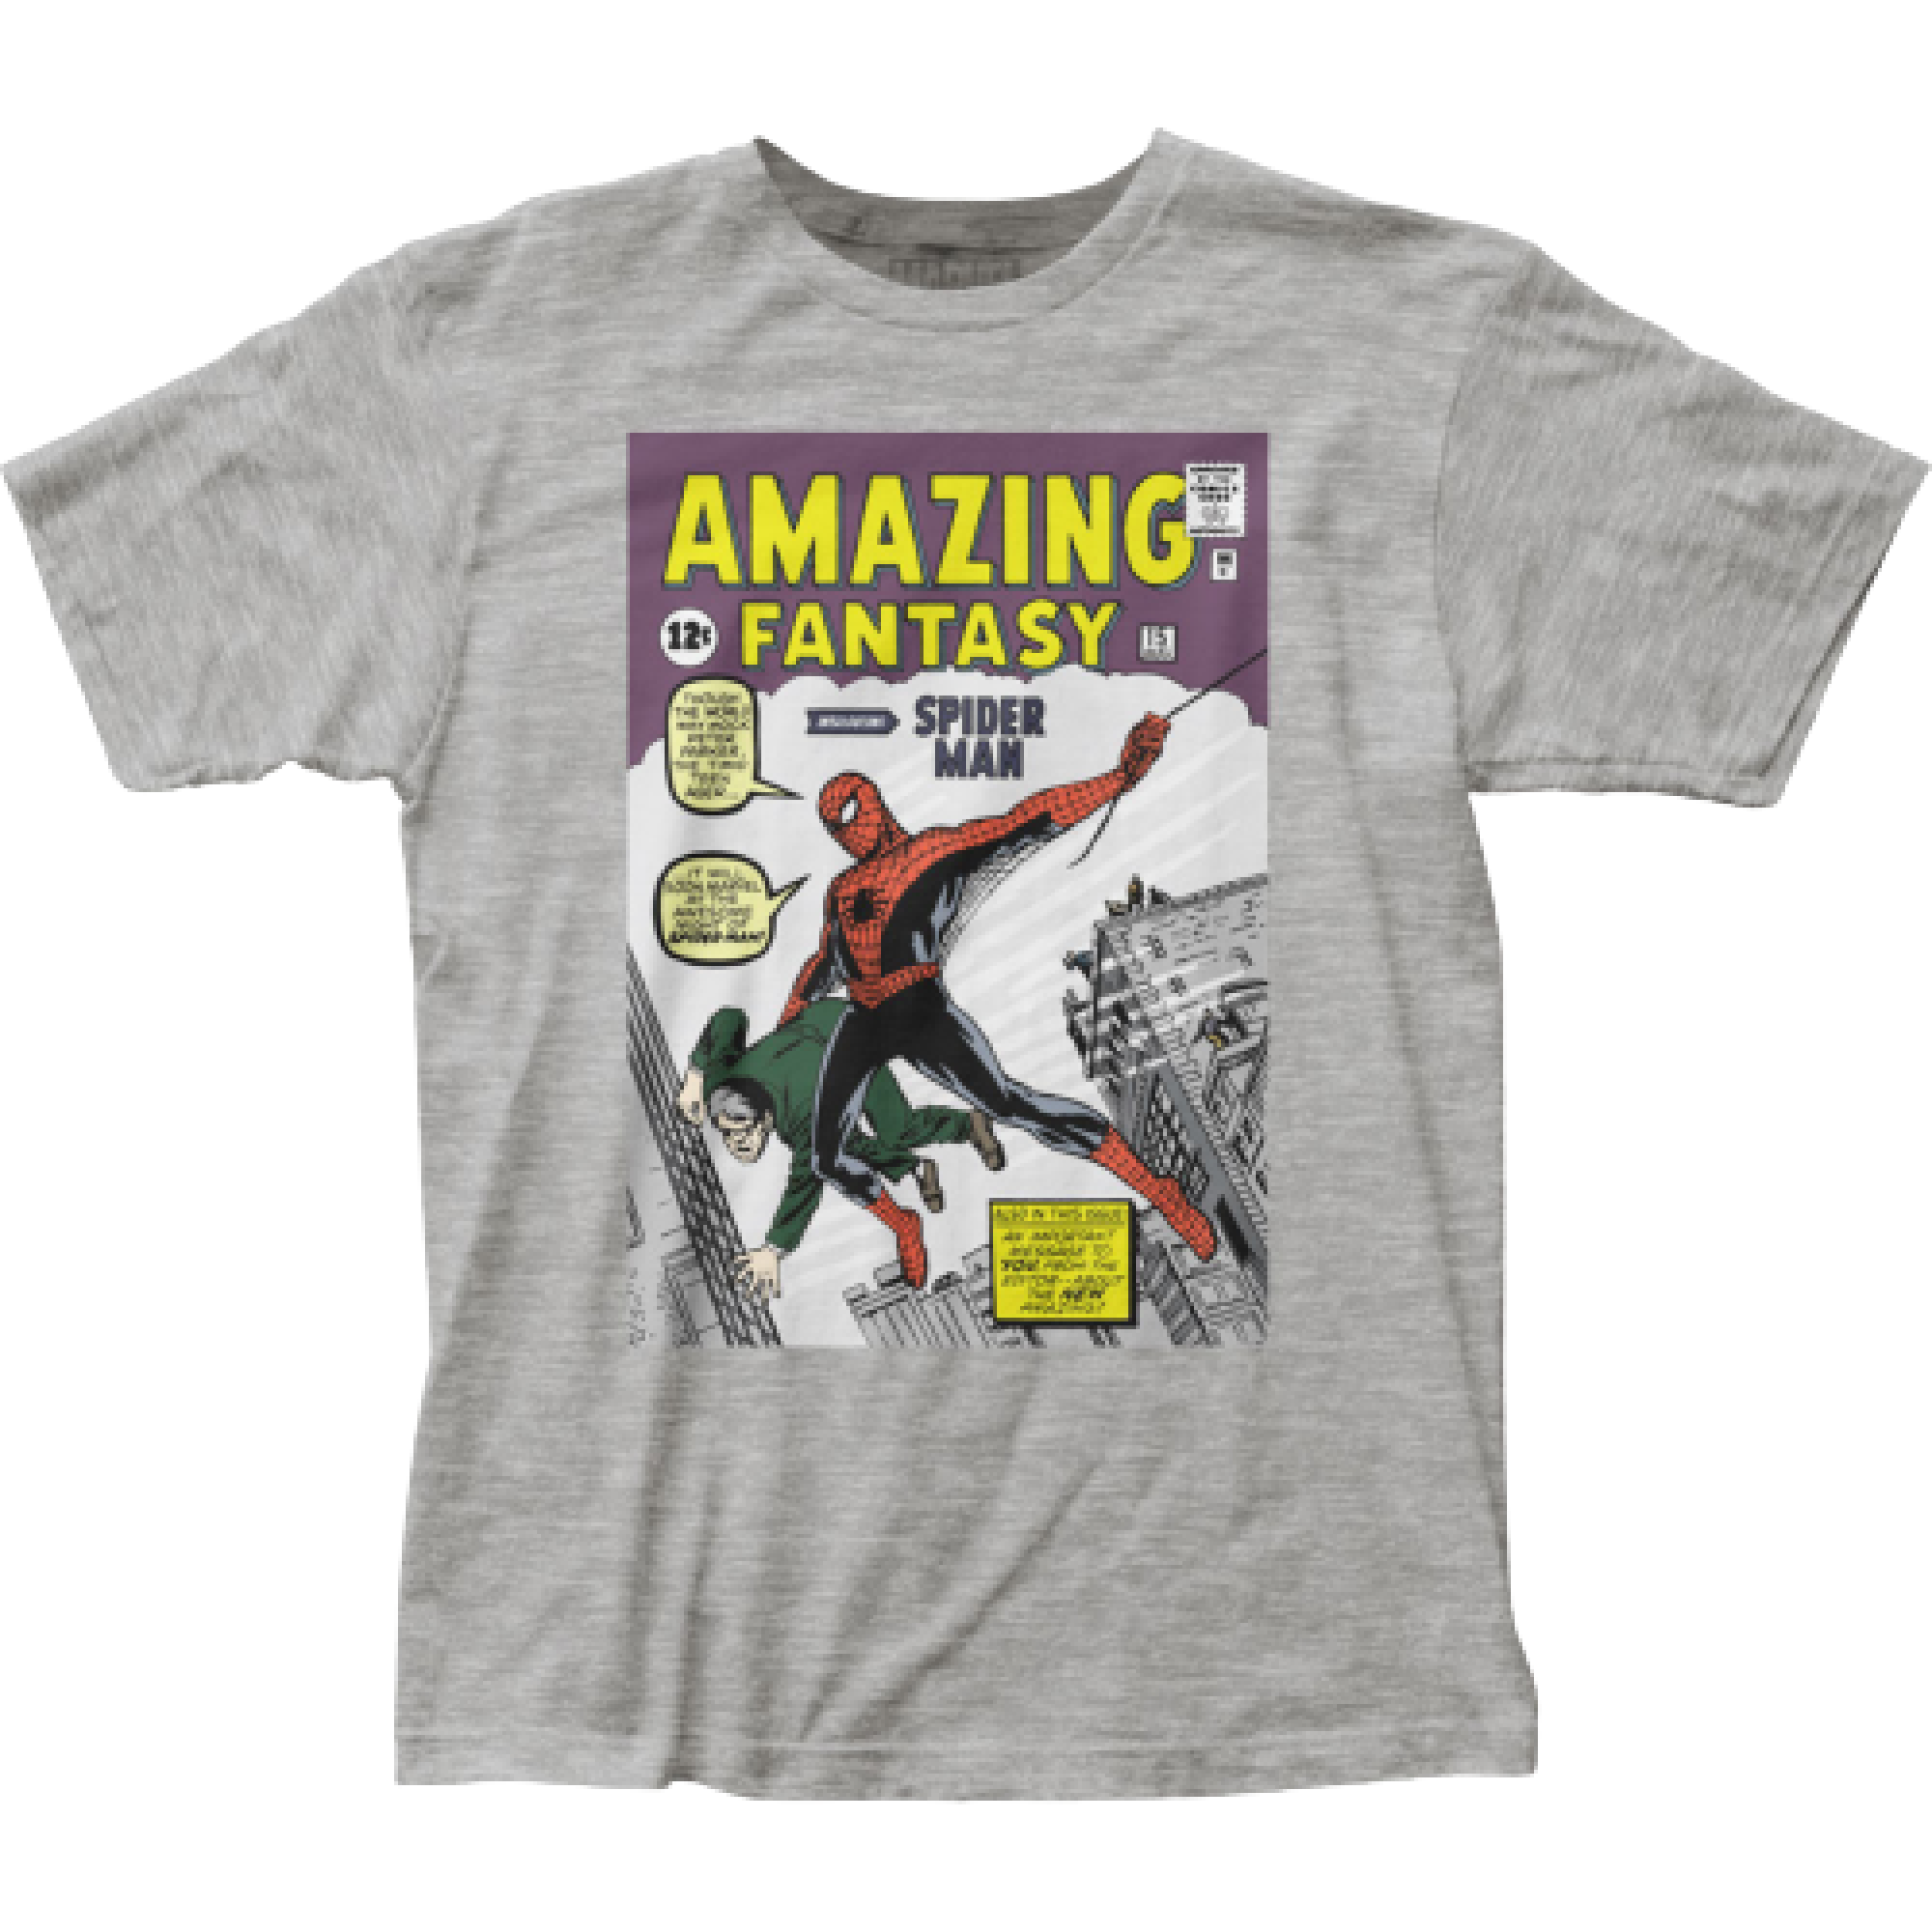 Spider-Man Amazing Fantasy Cover Art T-Shirt Small 